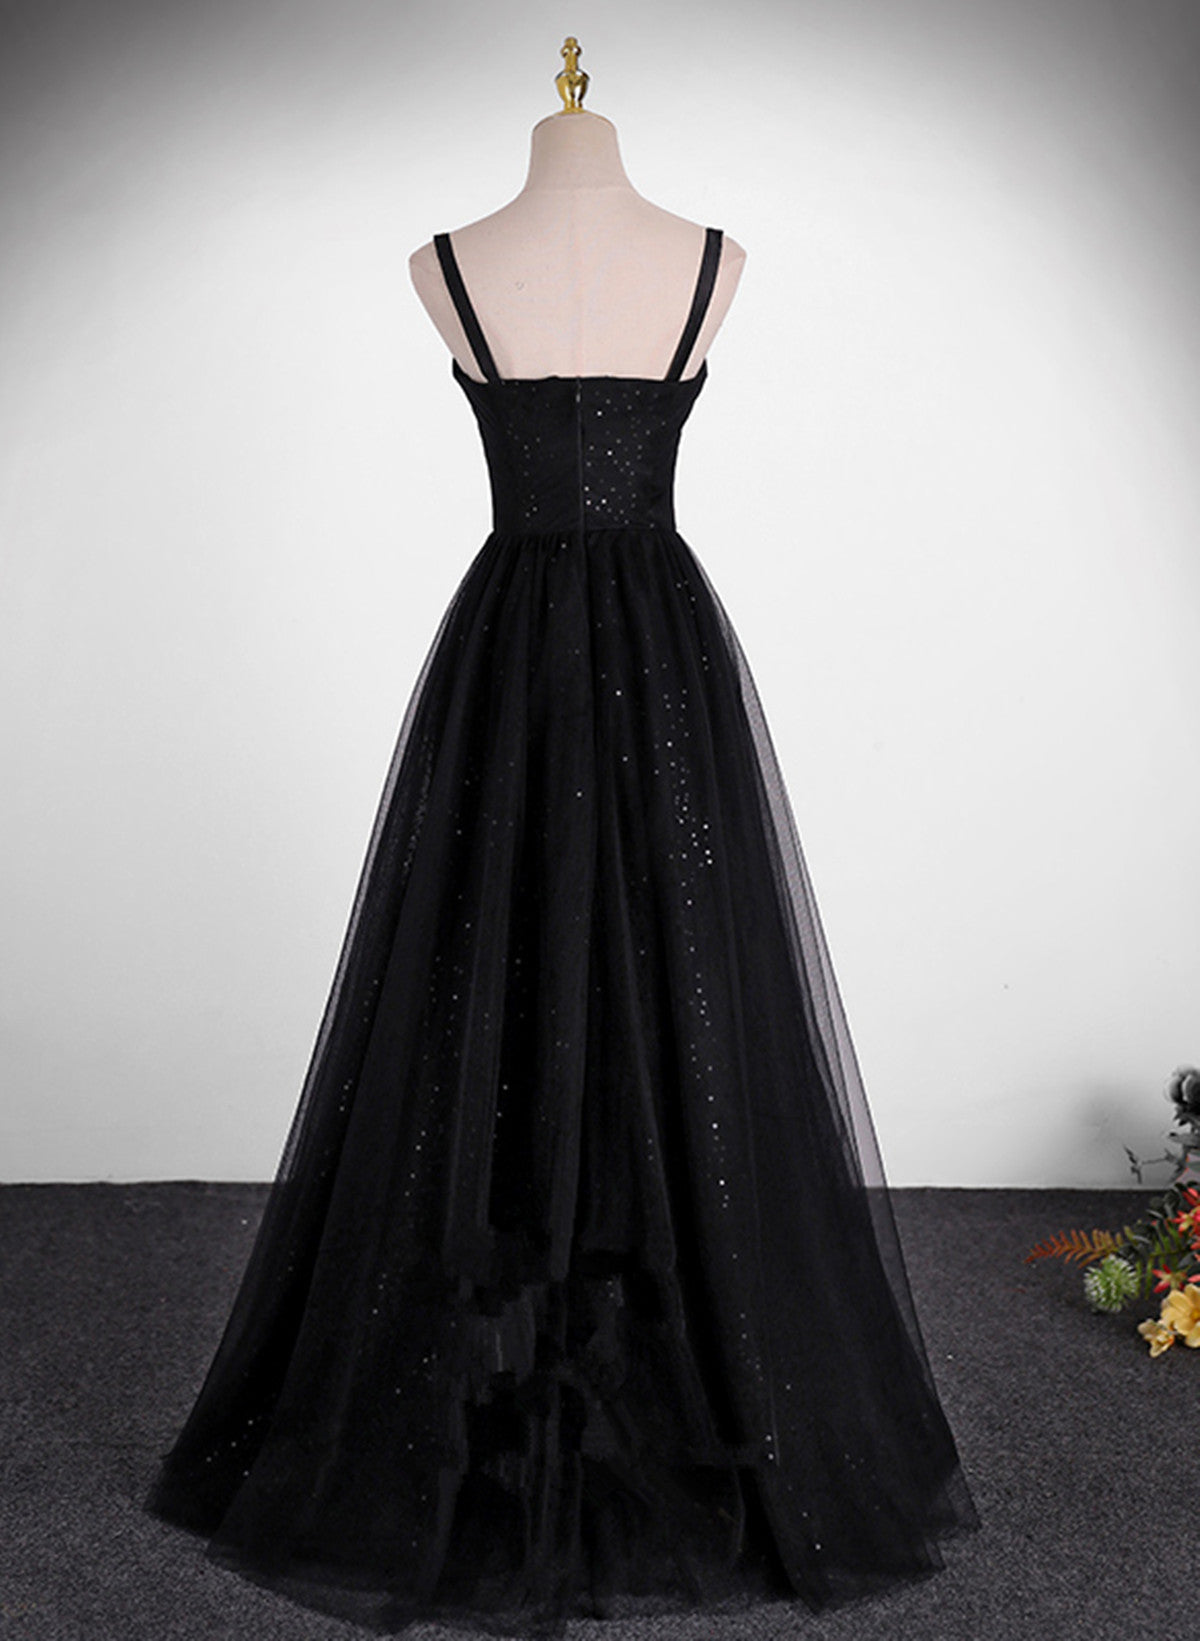 Black A-line Tulle Straps Floor Length Party Dress, Black Tulle Prom Dress